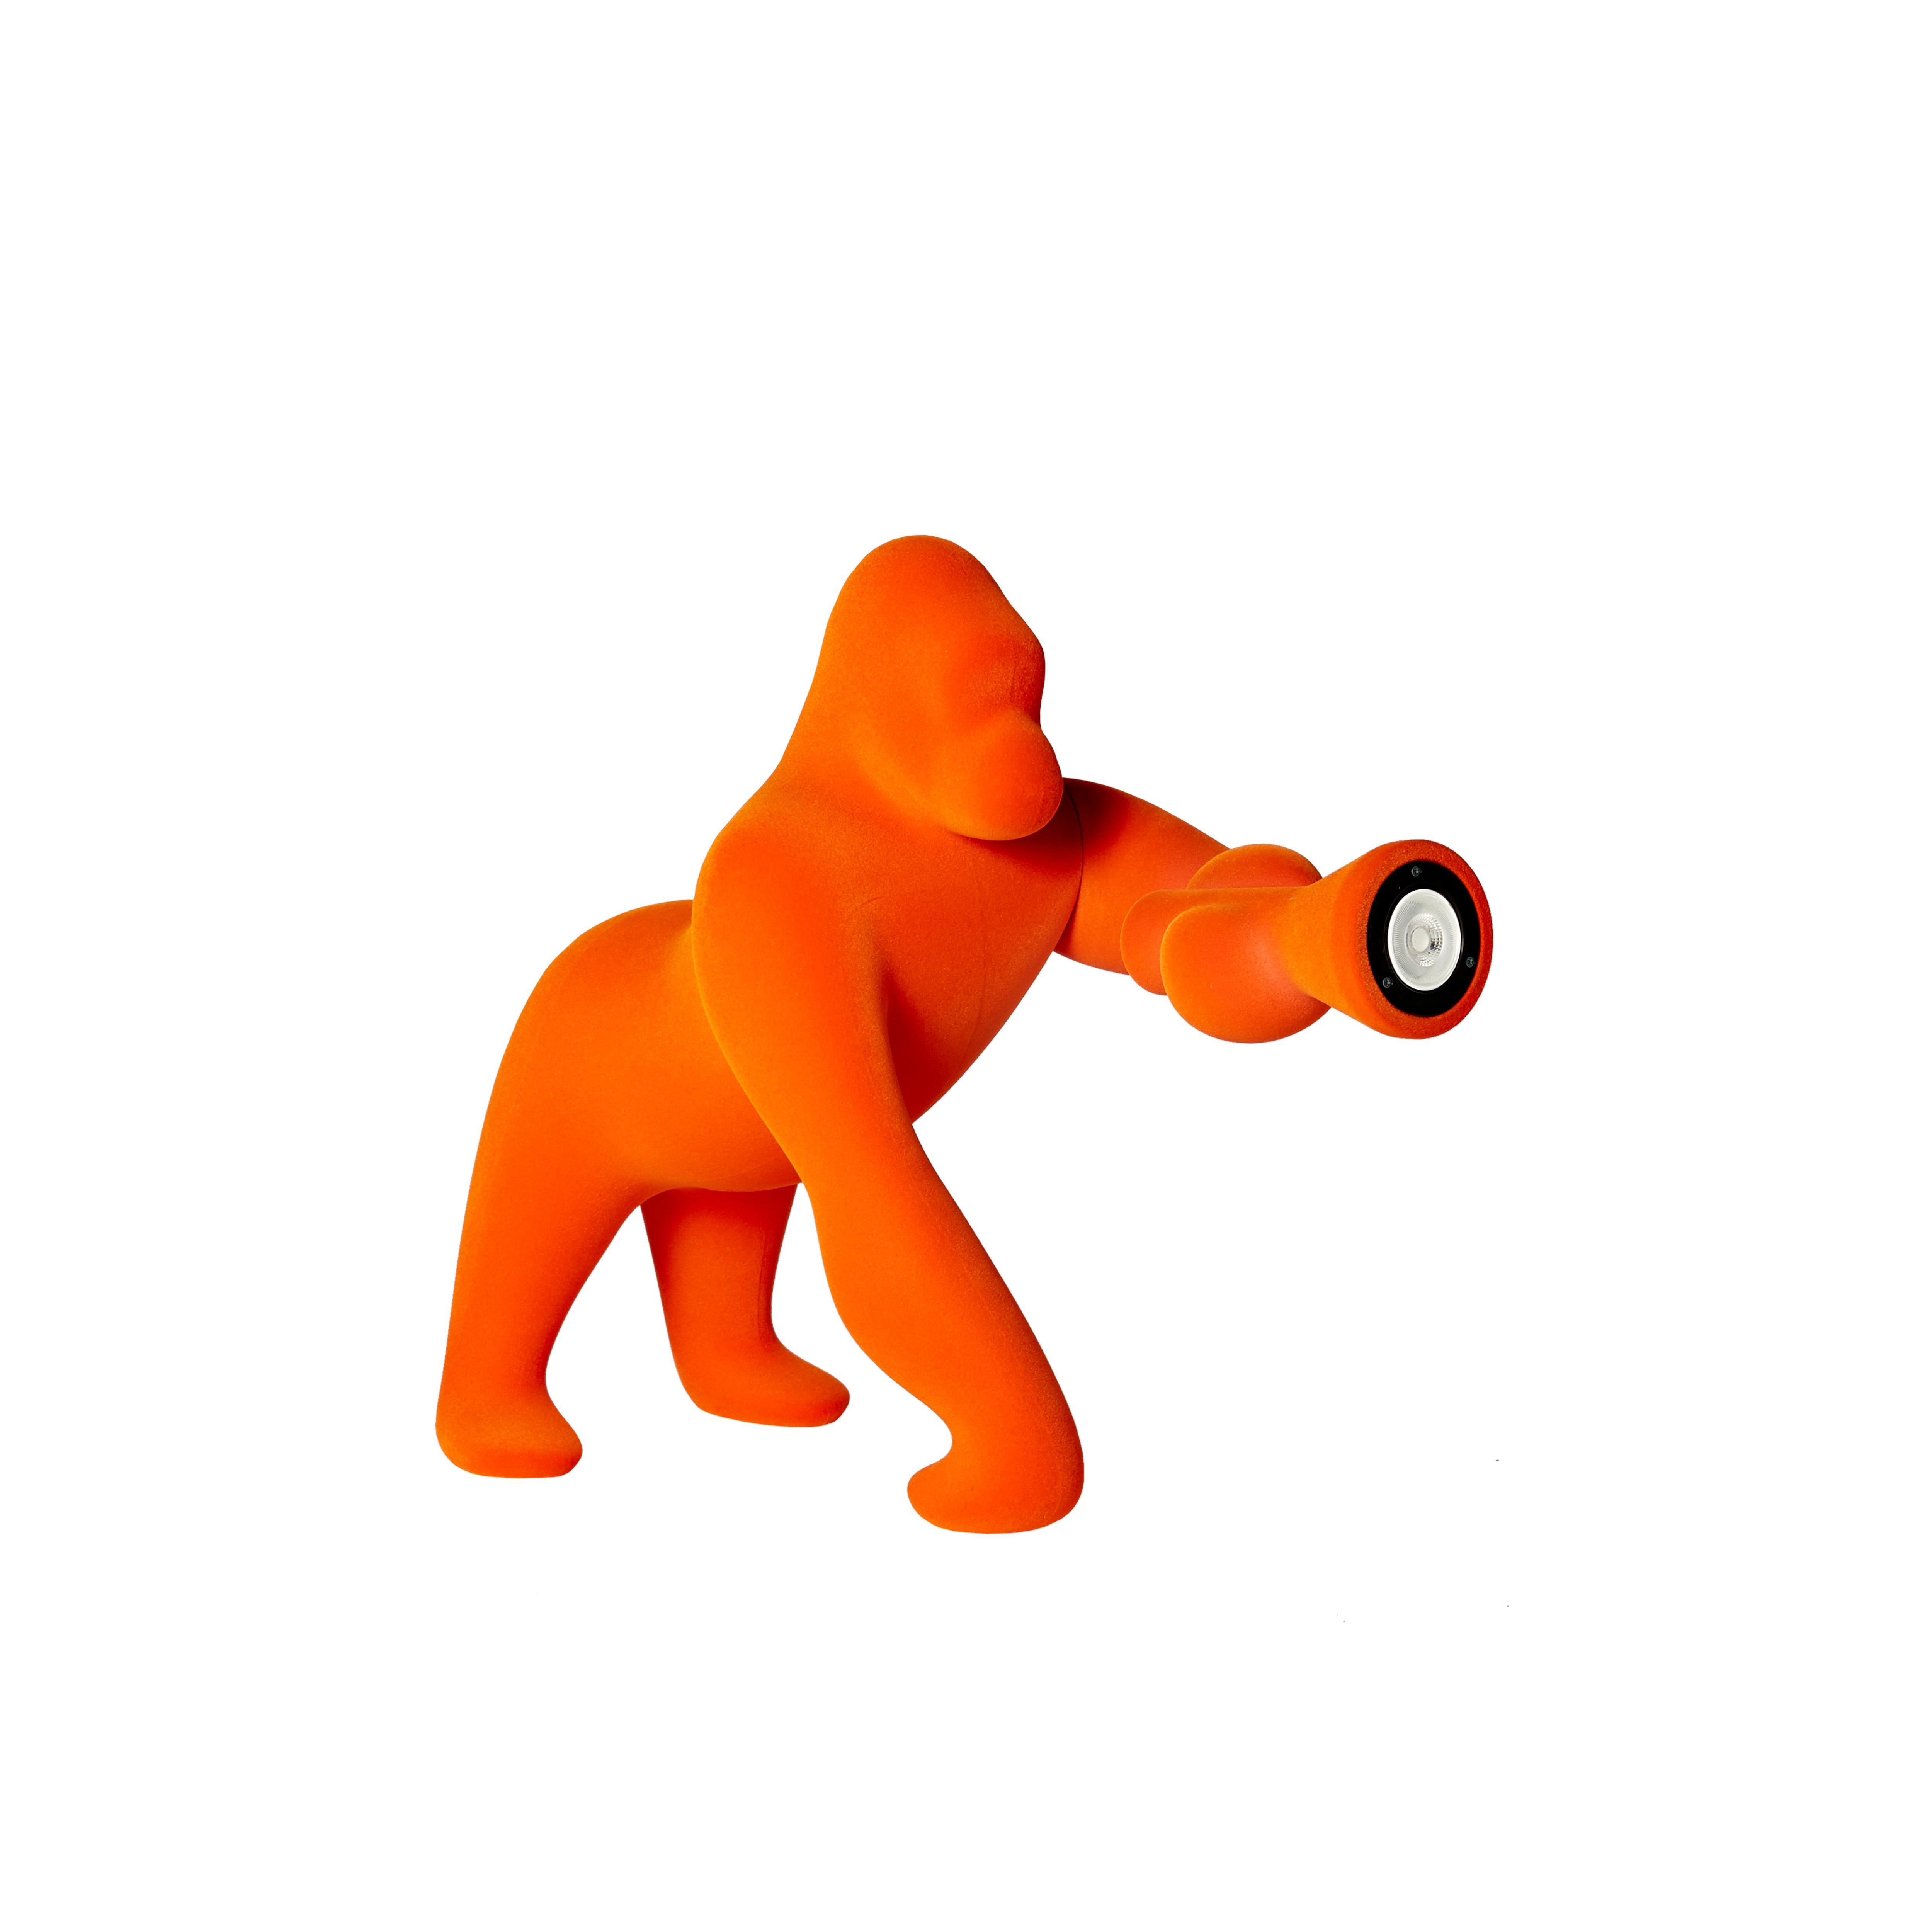 En vente : Orange Petite lampe de table ou lampadaire moderne sculpturale en velours orange Gorilla 2